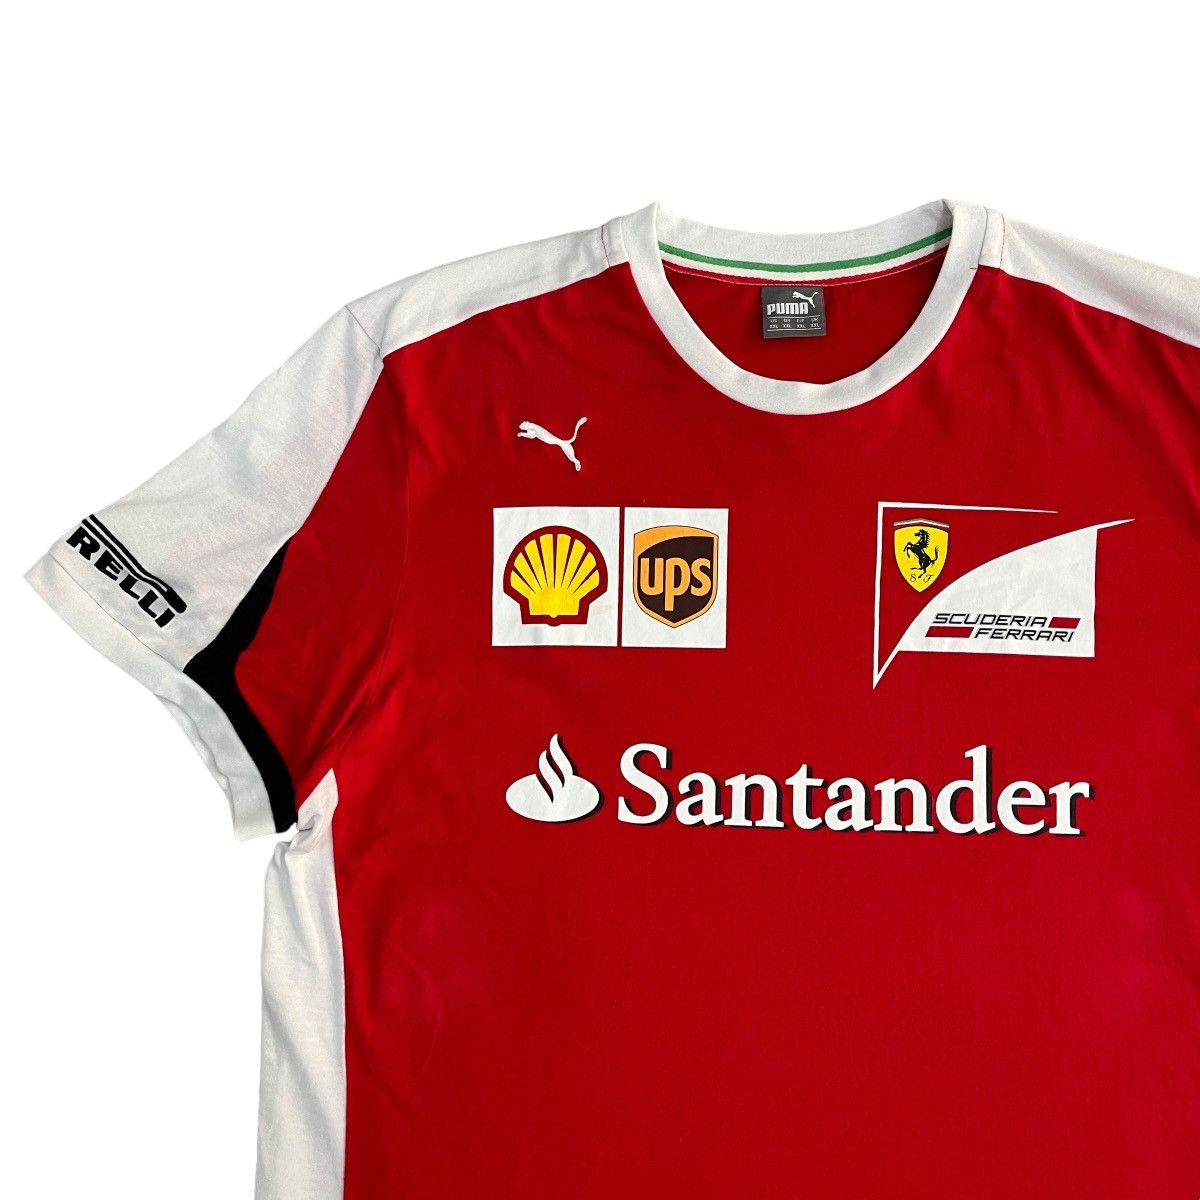 Puma Ferrari Official Scuderia Racing Team T-Shirt - 3